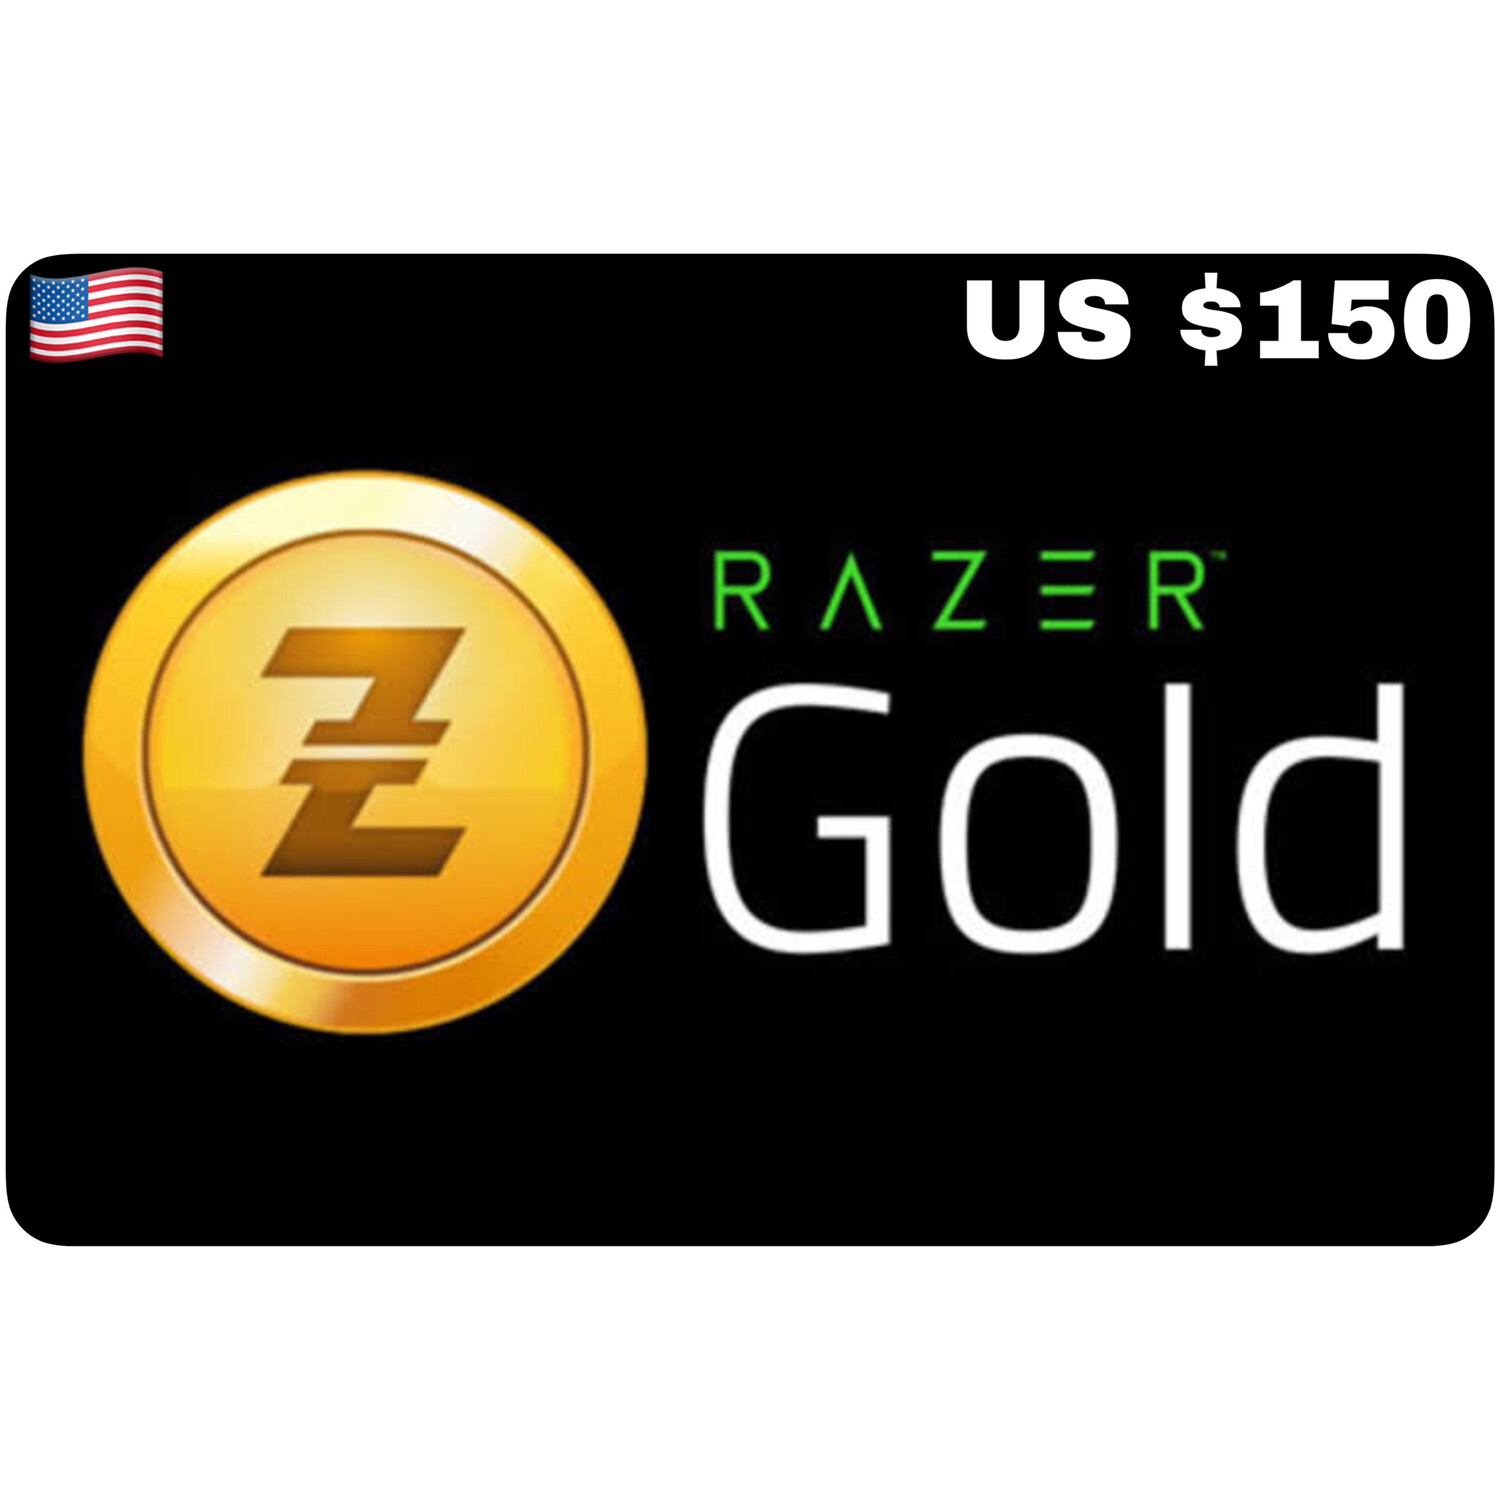 Razer Gold Pin US $150